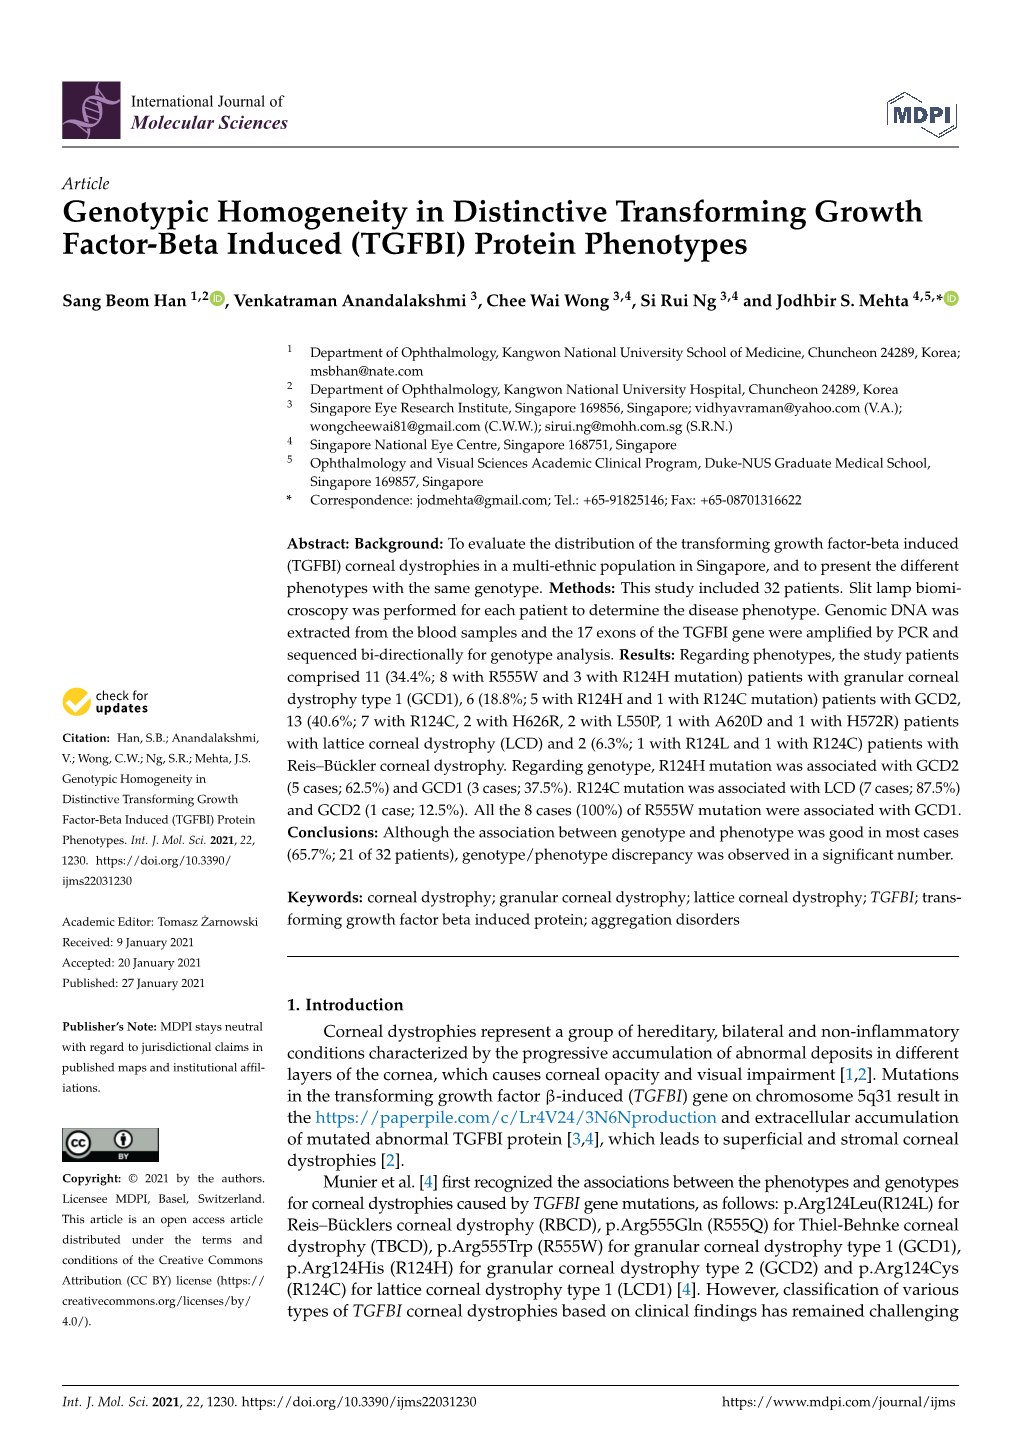 Genotypic Homogeneity in Distinctive Transforming Growth Factor-Beta Induced (TGFBI) Protein Phenotypes